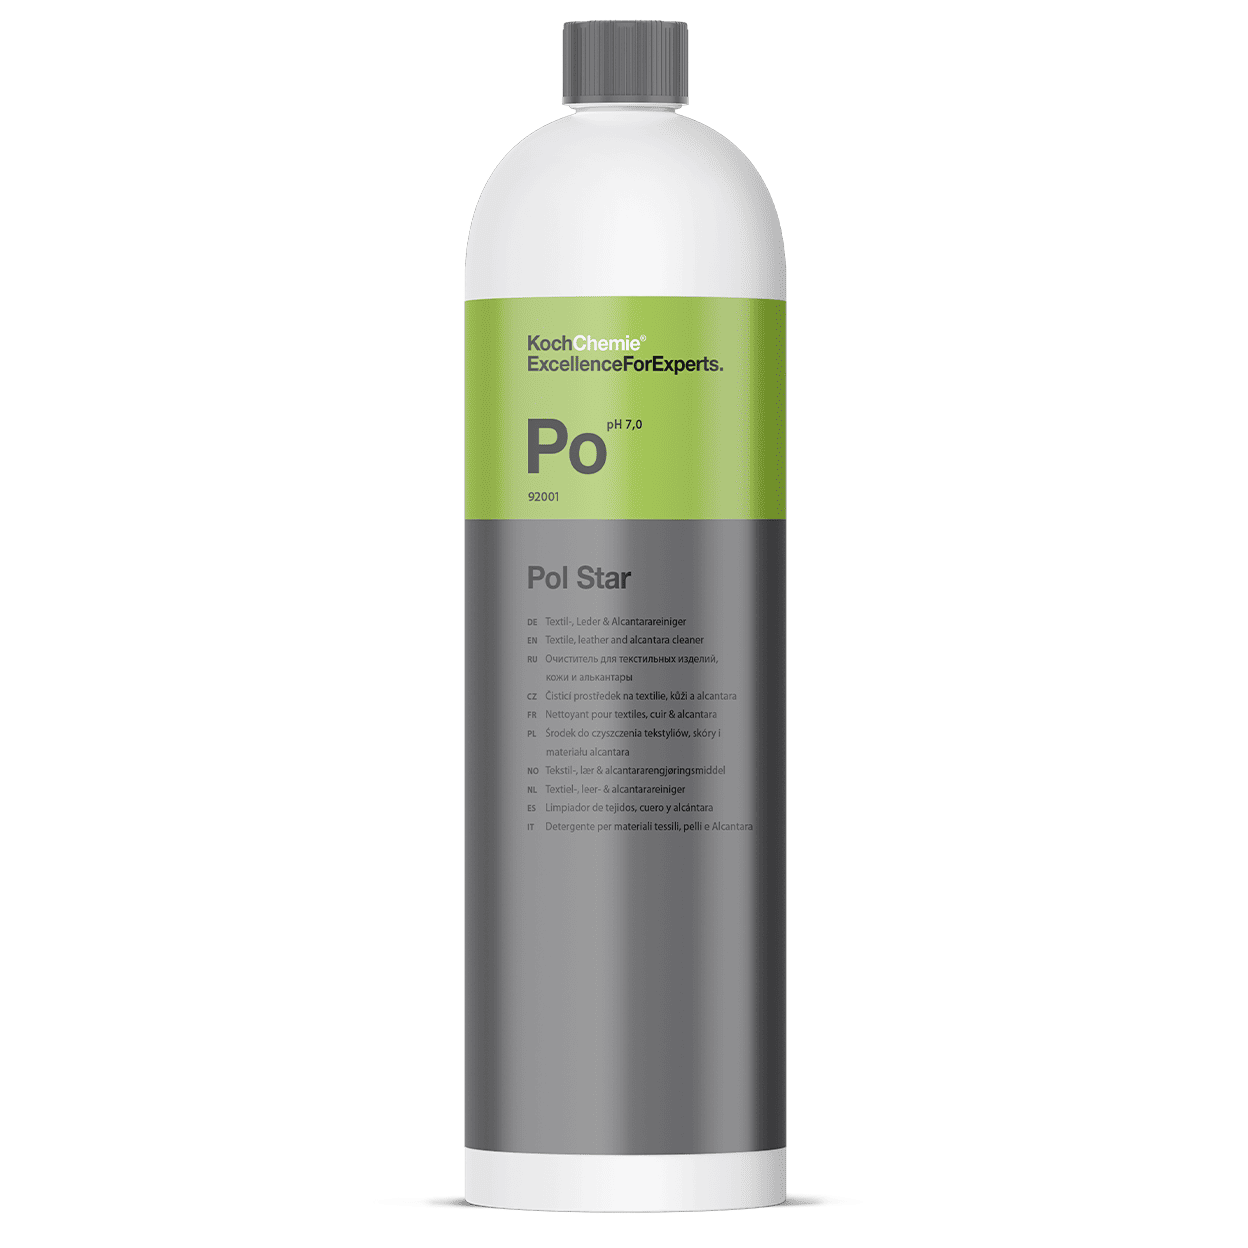 Koch Chemie Pol Star “Po” - Cleans Leather, Fabric and Alcantara